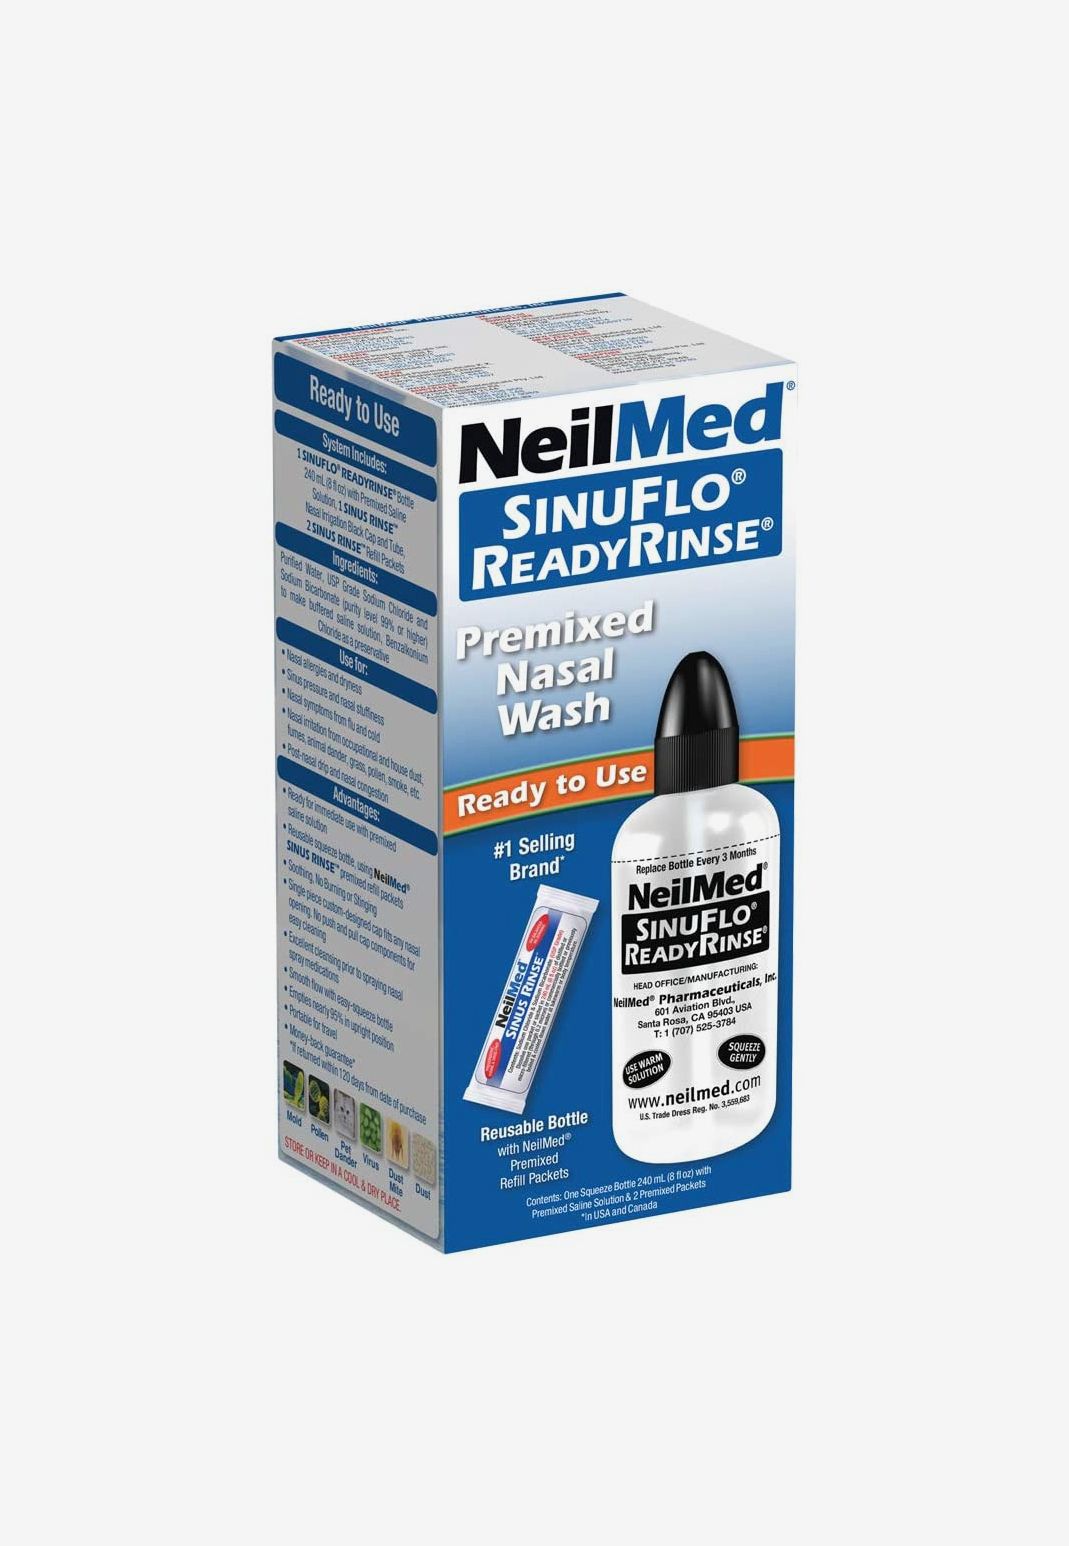 NeilMed Sinus Rinse Pediatric Complete Saline Nasal Rinse Kit with 60  Premixed Packets